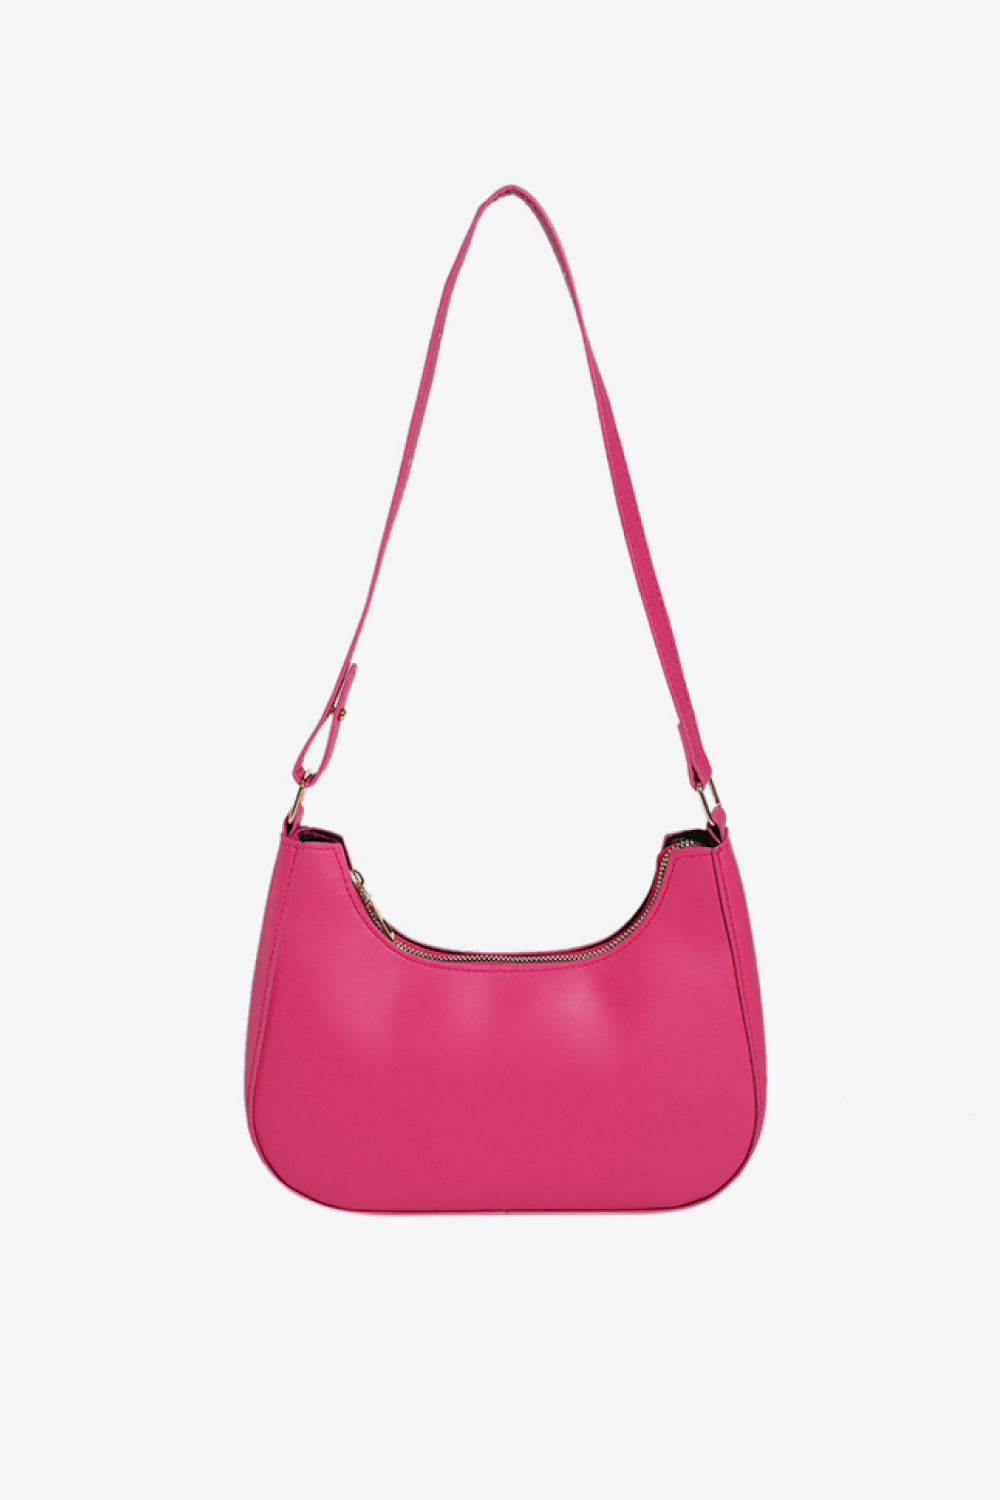 PU Leather Shoulder Bag Hot Pink One Size